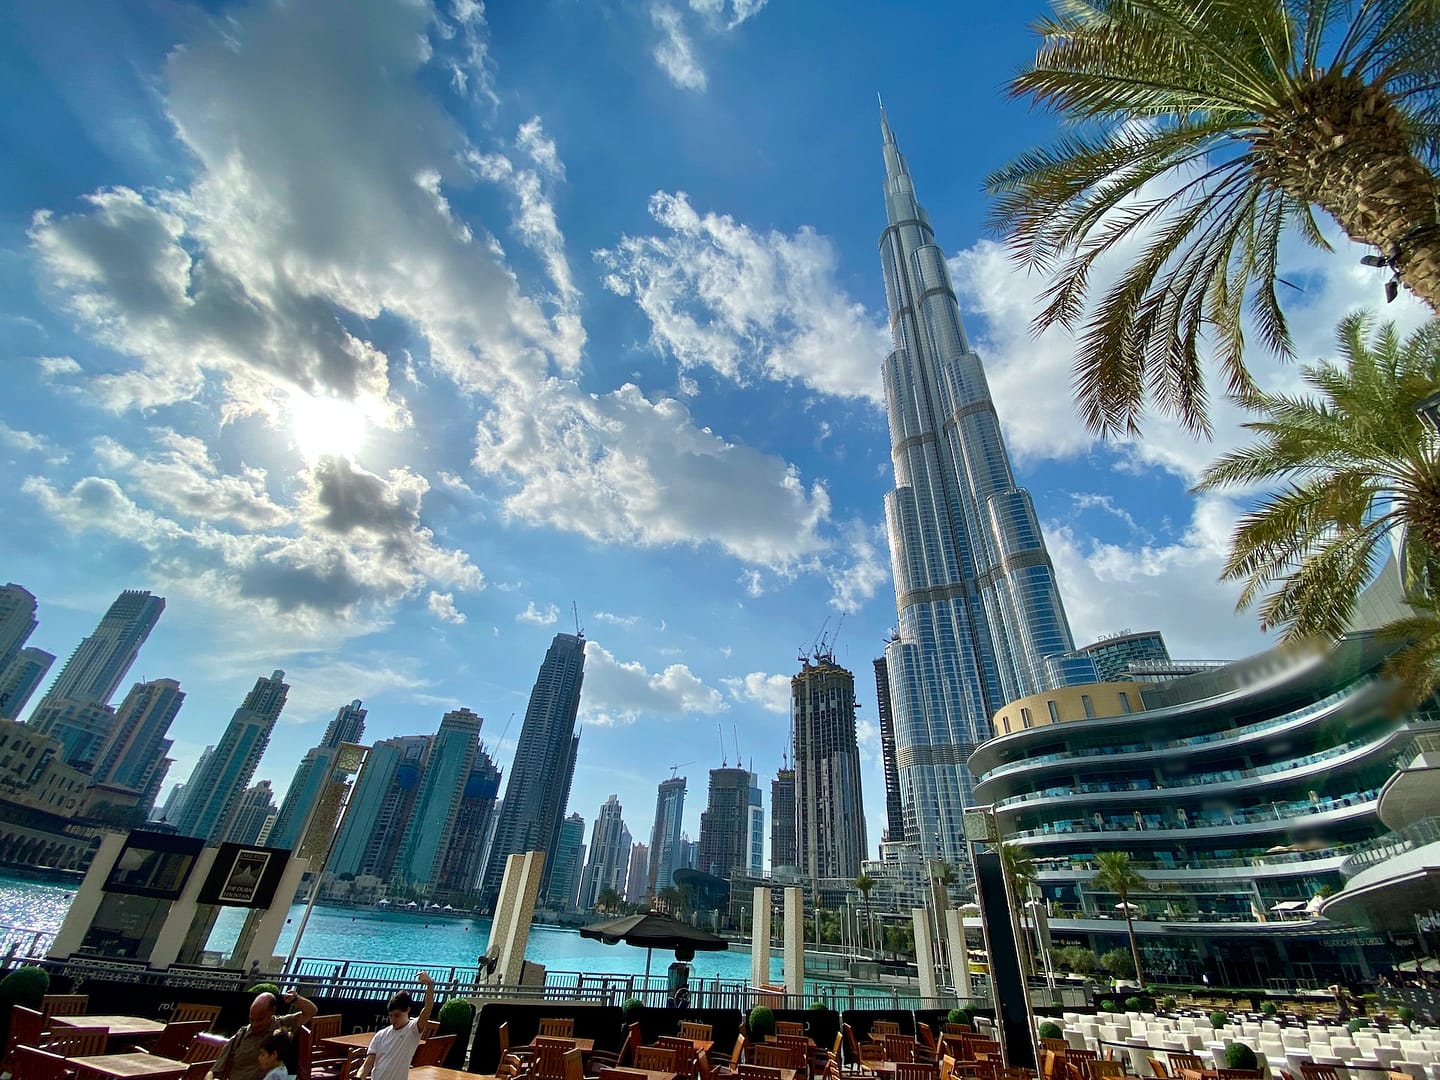 dubai fun facts: the burj khalifa is the tallest man-made building on earth